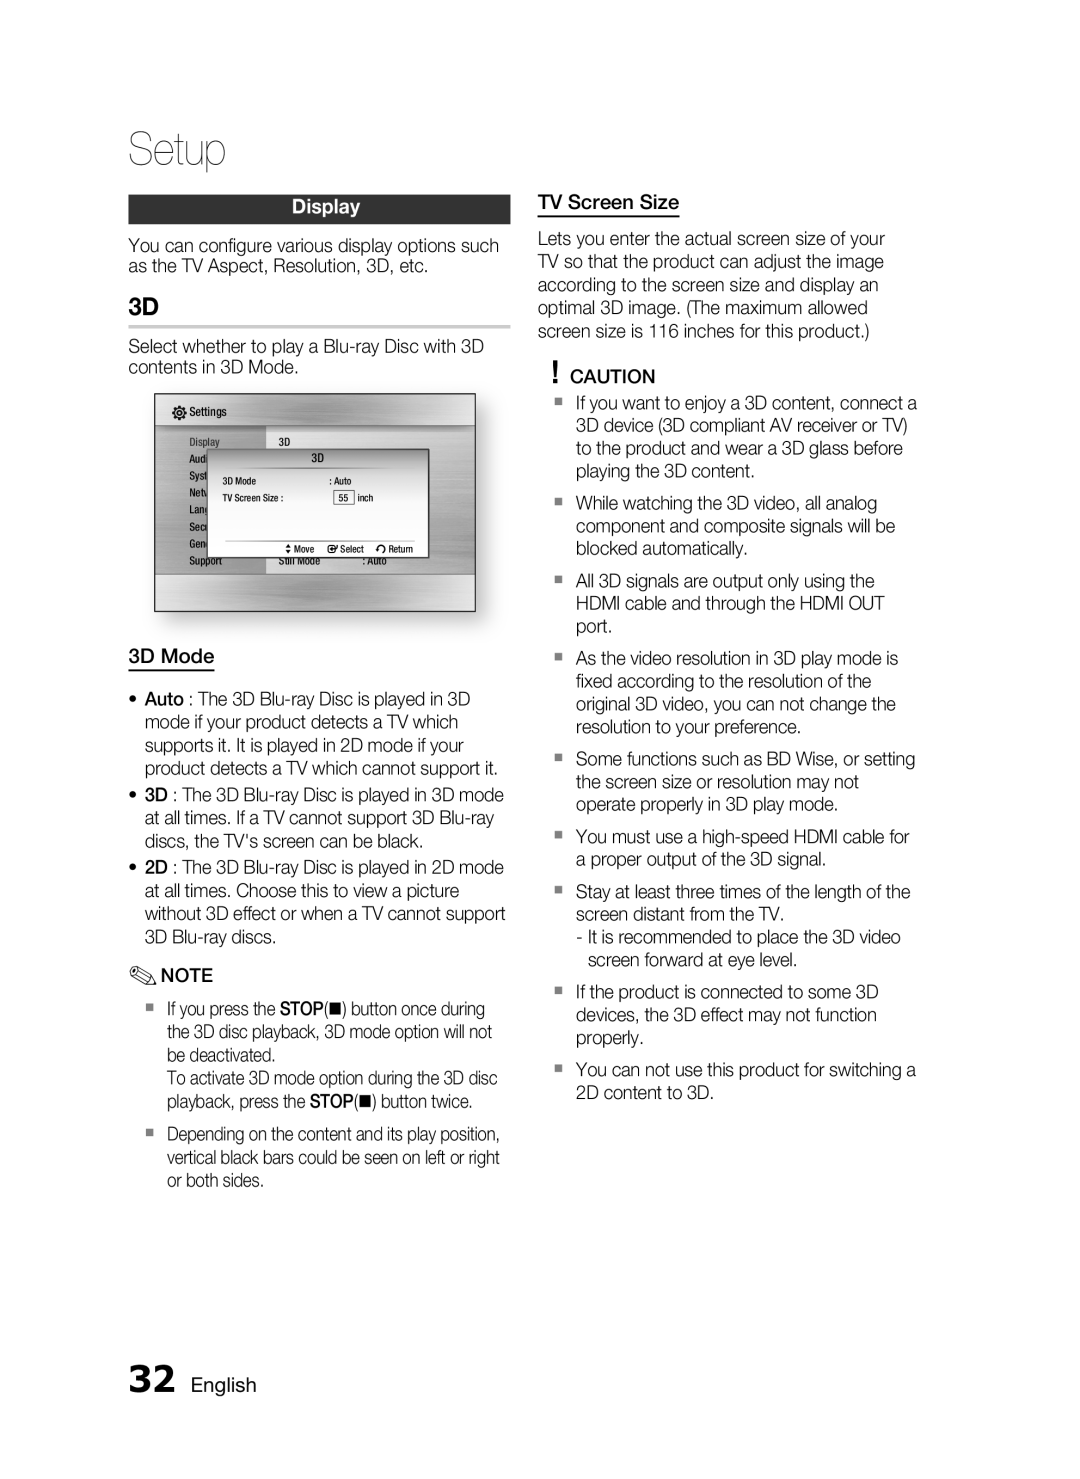 Samsung C6600 user manual Display, 3D Mode, TV Screen Size, English, Setup 